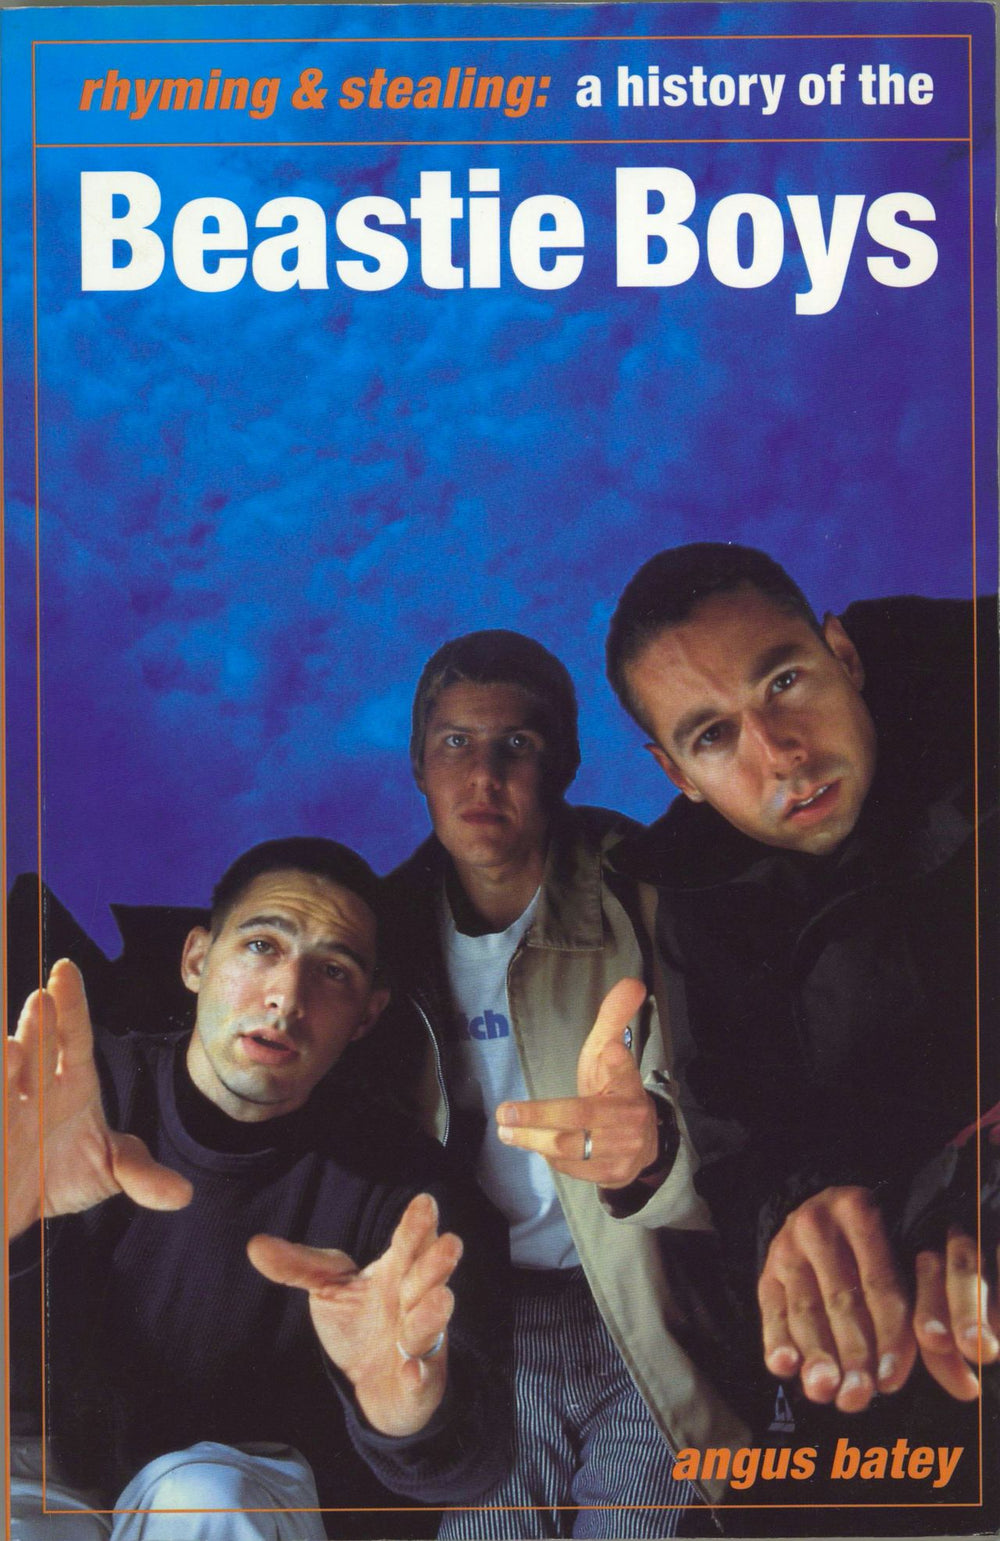 Beastie Boys Rhyming & Stealing: A History Of The Beastie Boys UK book 1-897783-14-0